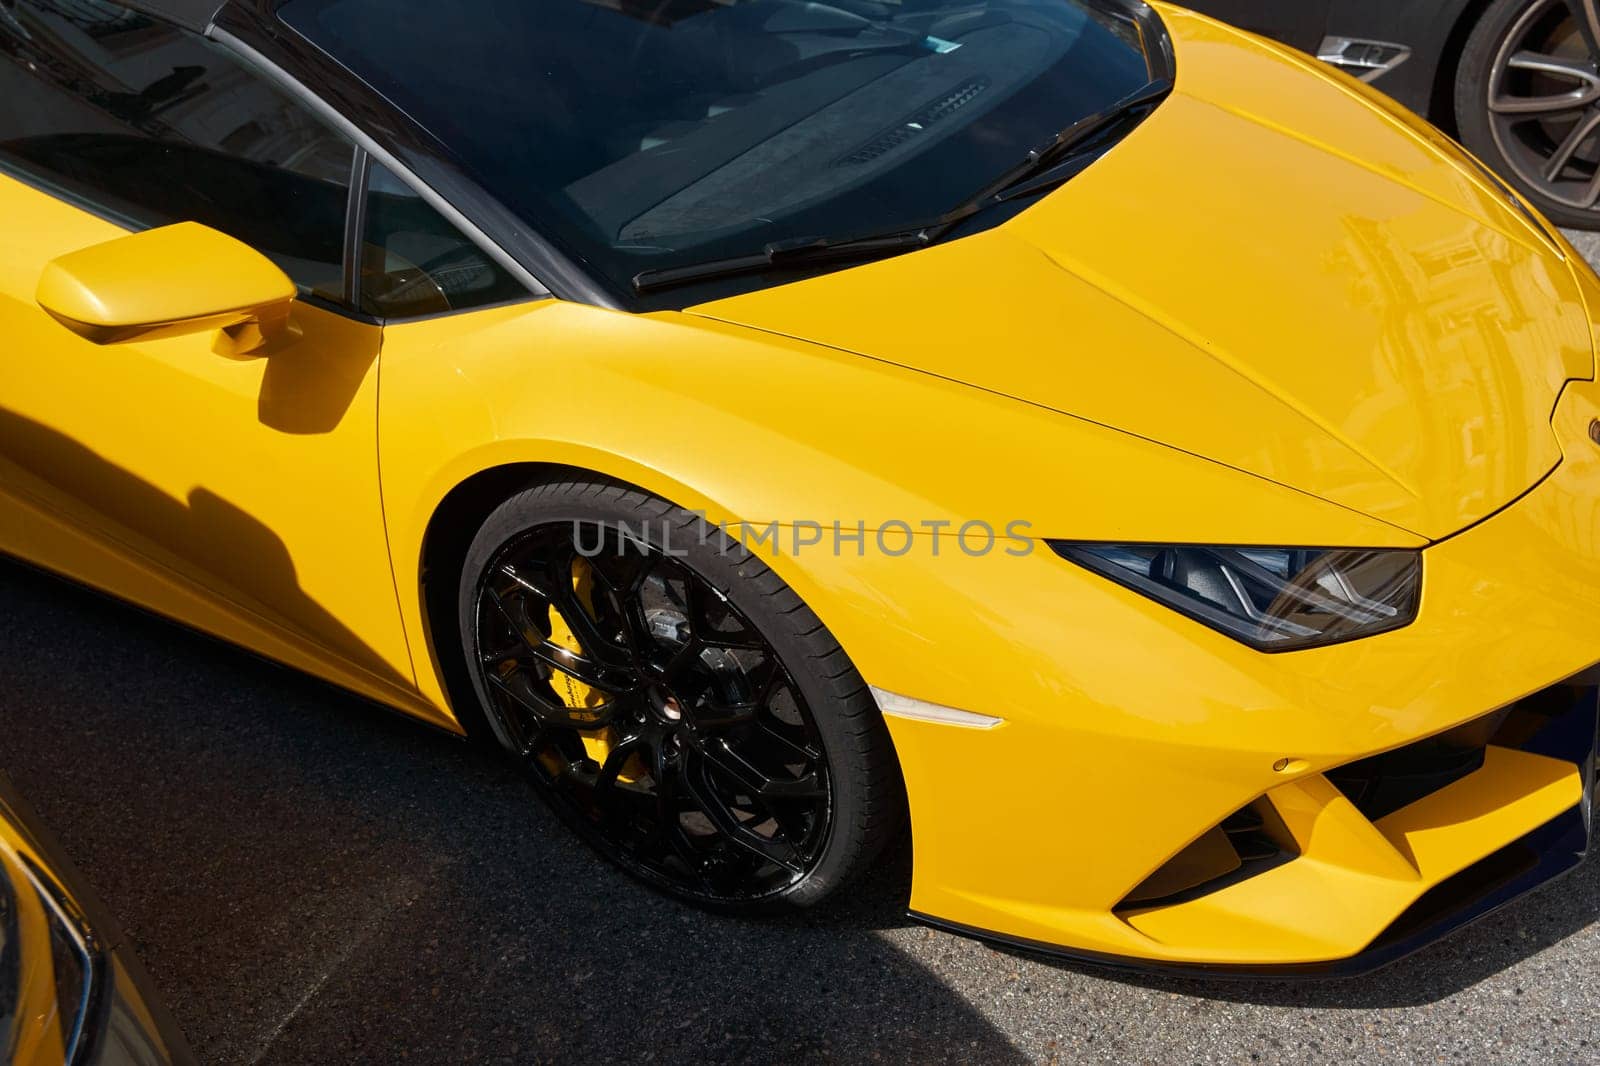 Monaco, Monte Carlo, 29 September 2022 - Close-up view of yellow sports car Lamborghini on street by vladimirdrozdin